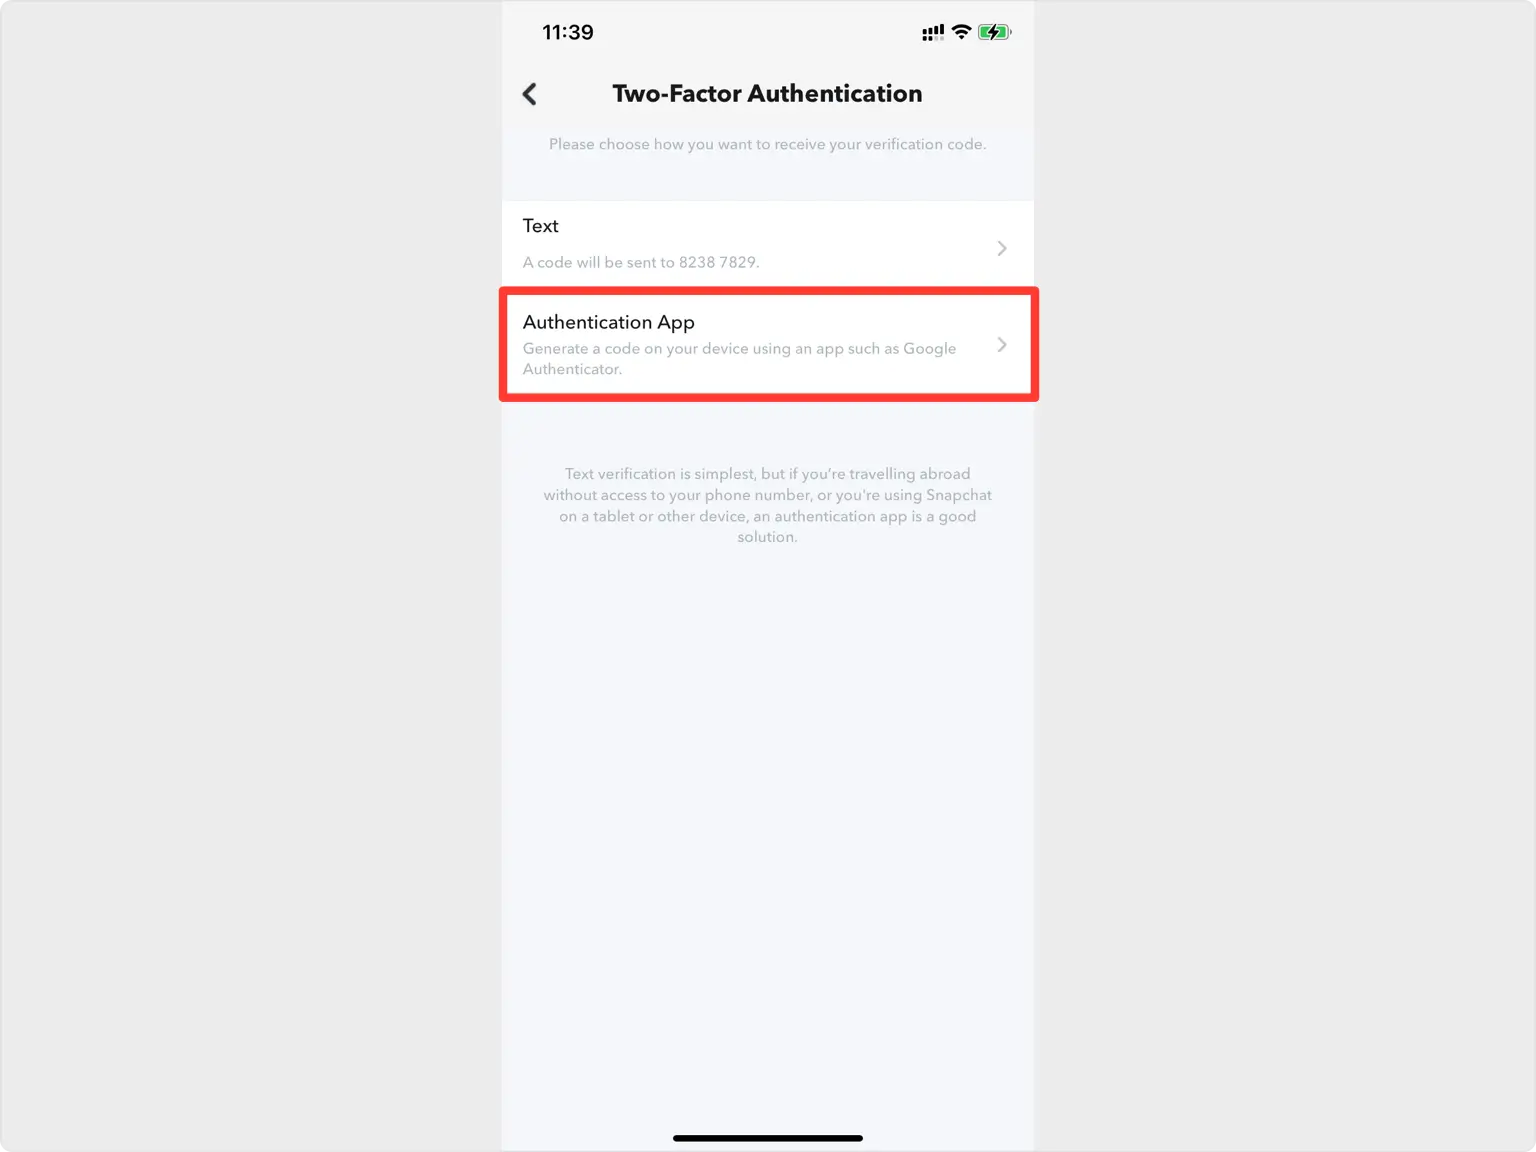 Select Authentication App